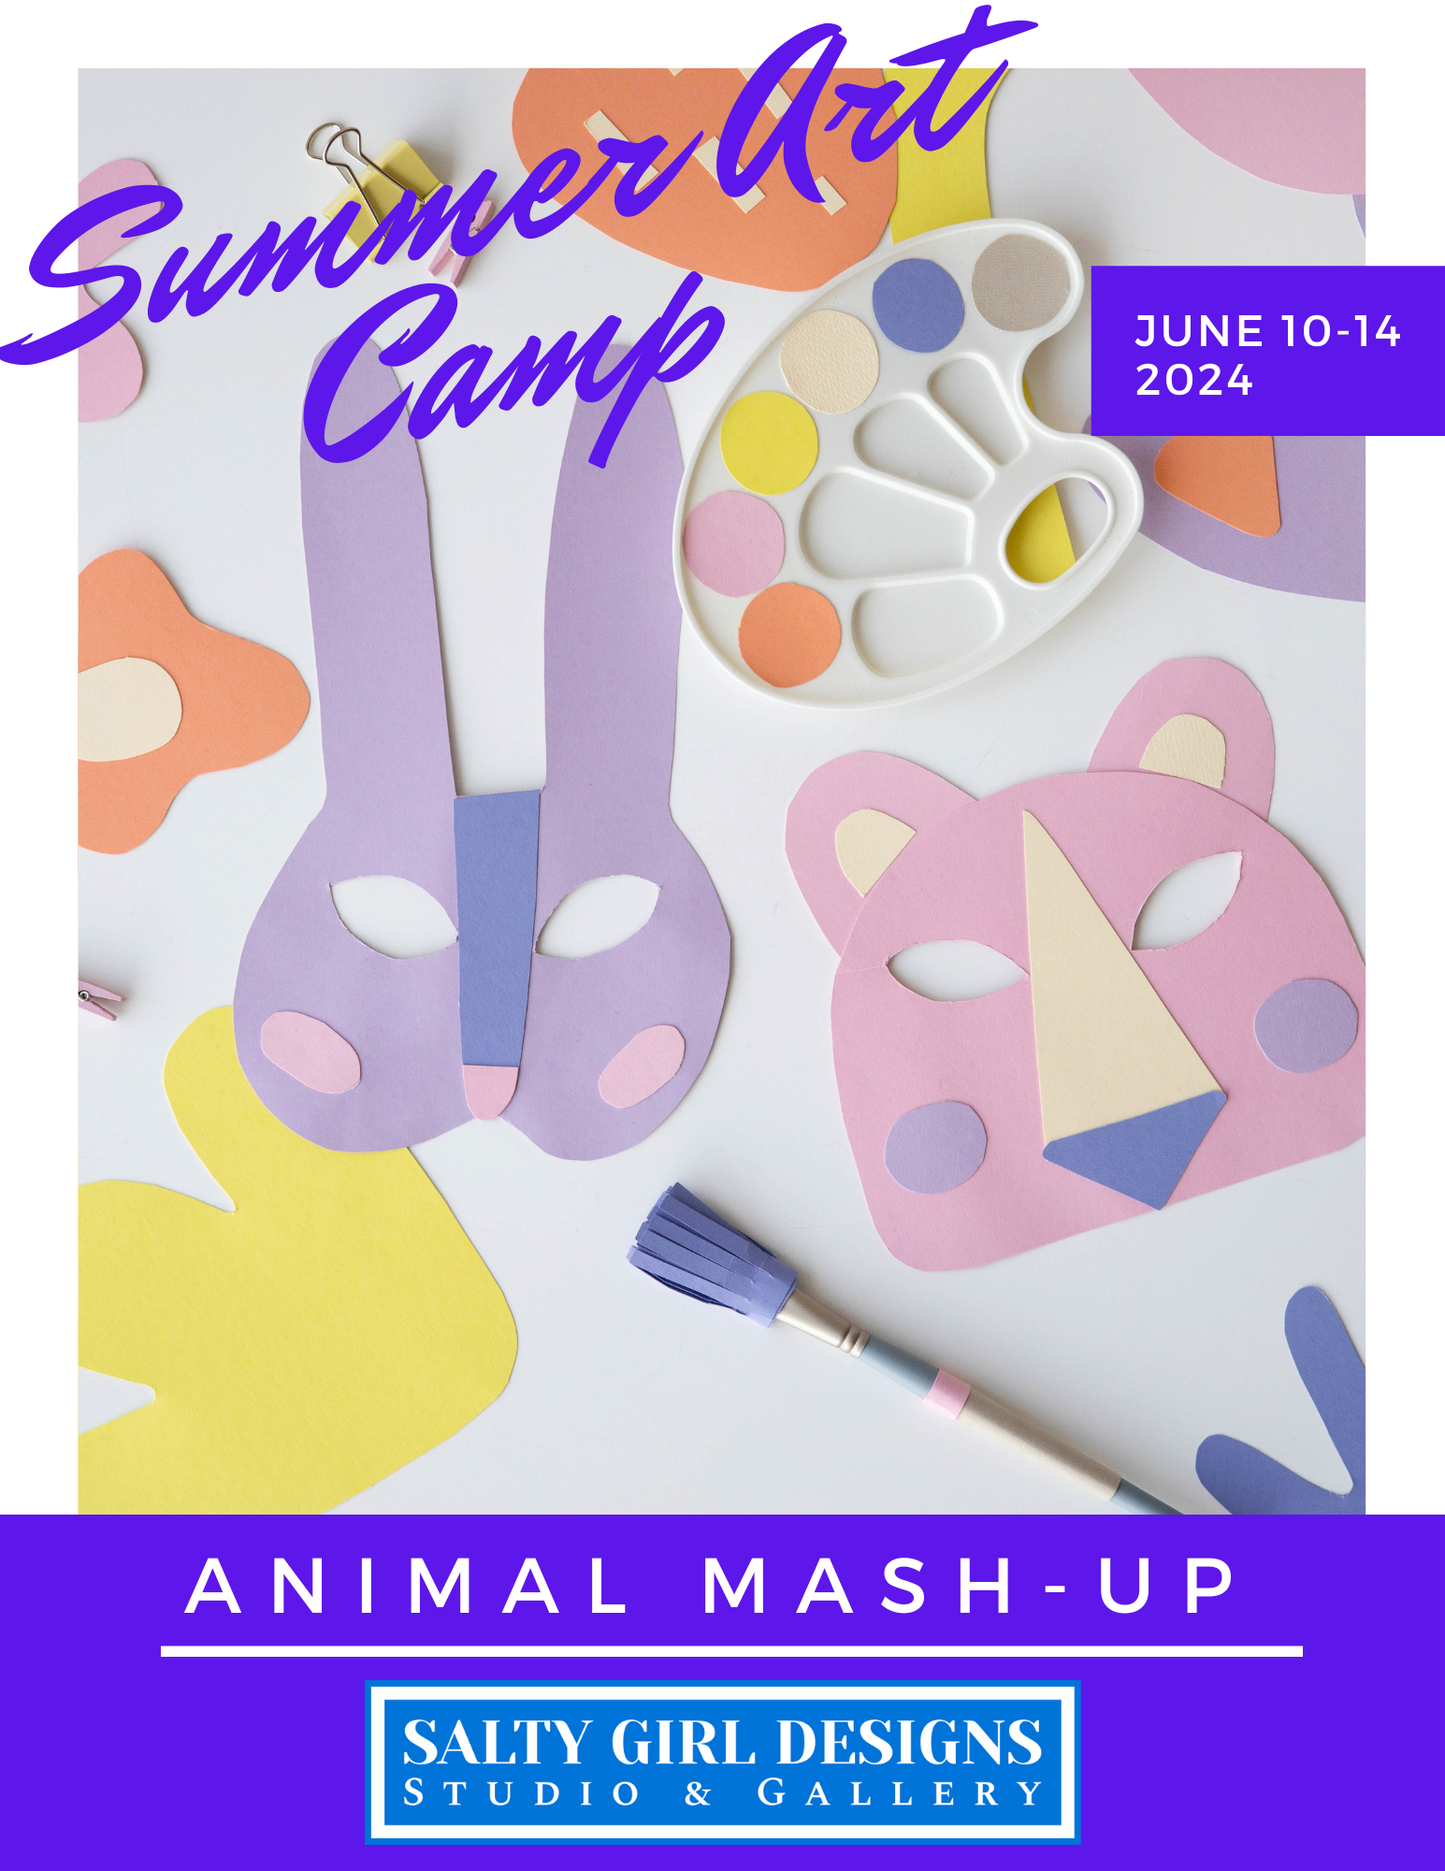 Animal Mash-Up, Summer Art Camp, June 10-14